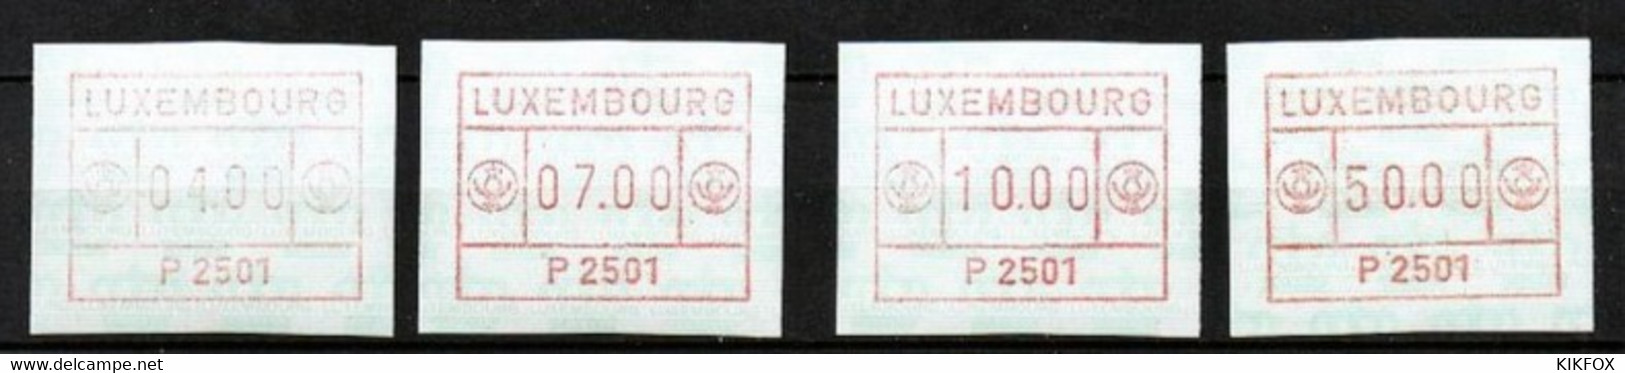 Luxembourg, Luxemburg , 1983, MI 1 ,AUTOMATENMARKEN, DISTRIBUTEUR , 4 WERTE - Vignette